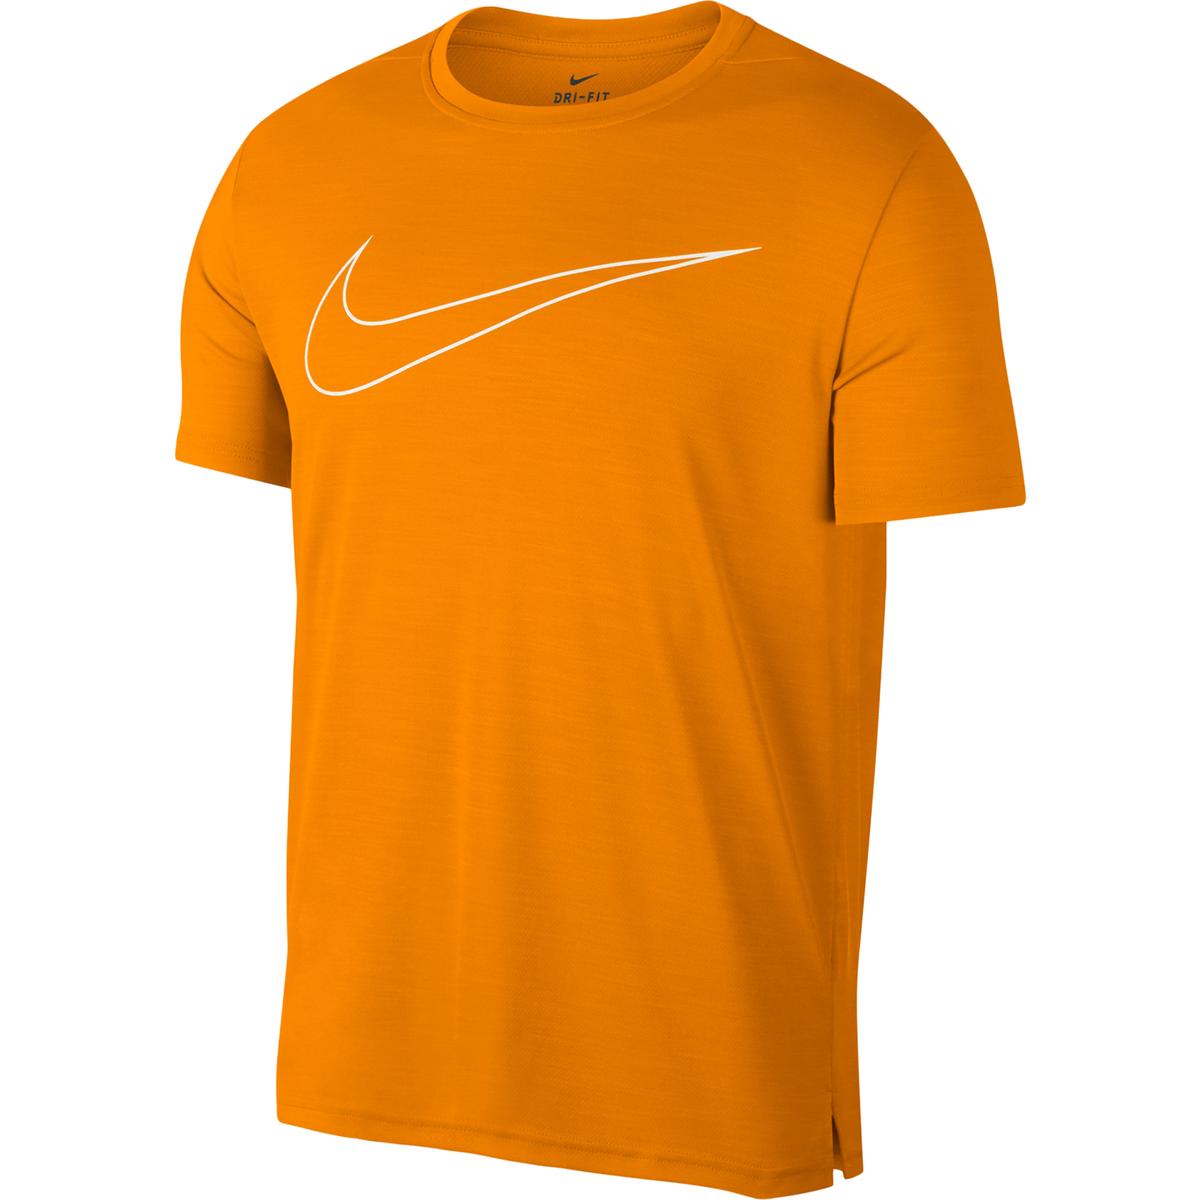 Nike Mens Orange Fitness Running Tee T-Shirt L BHFO 5489 192500090879 ...